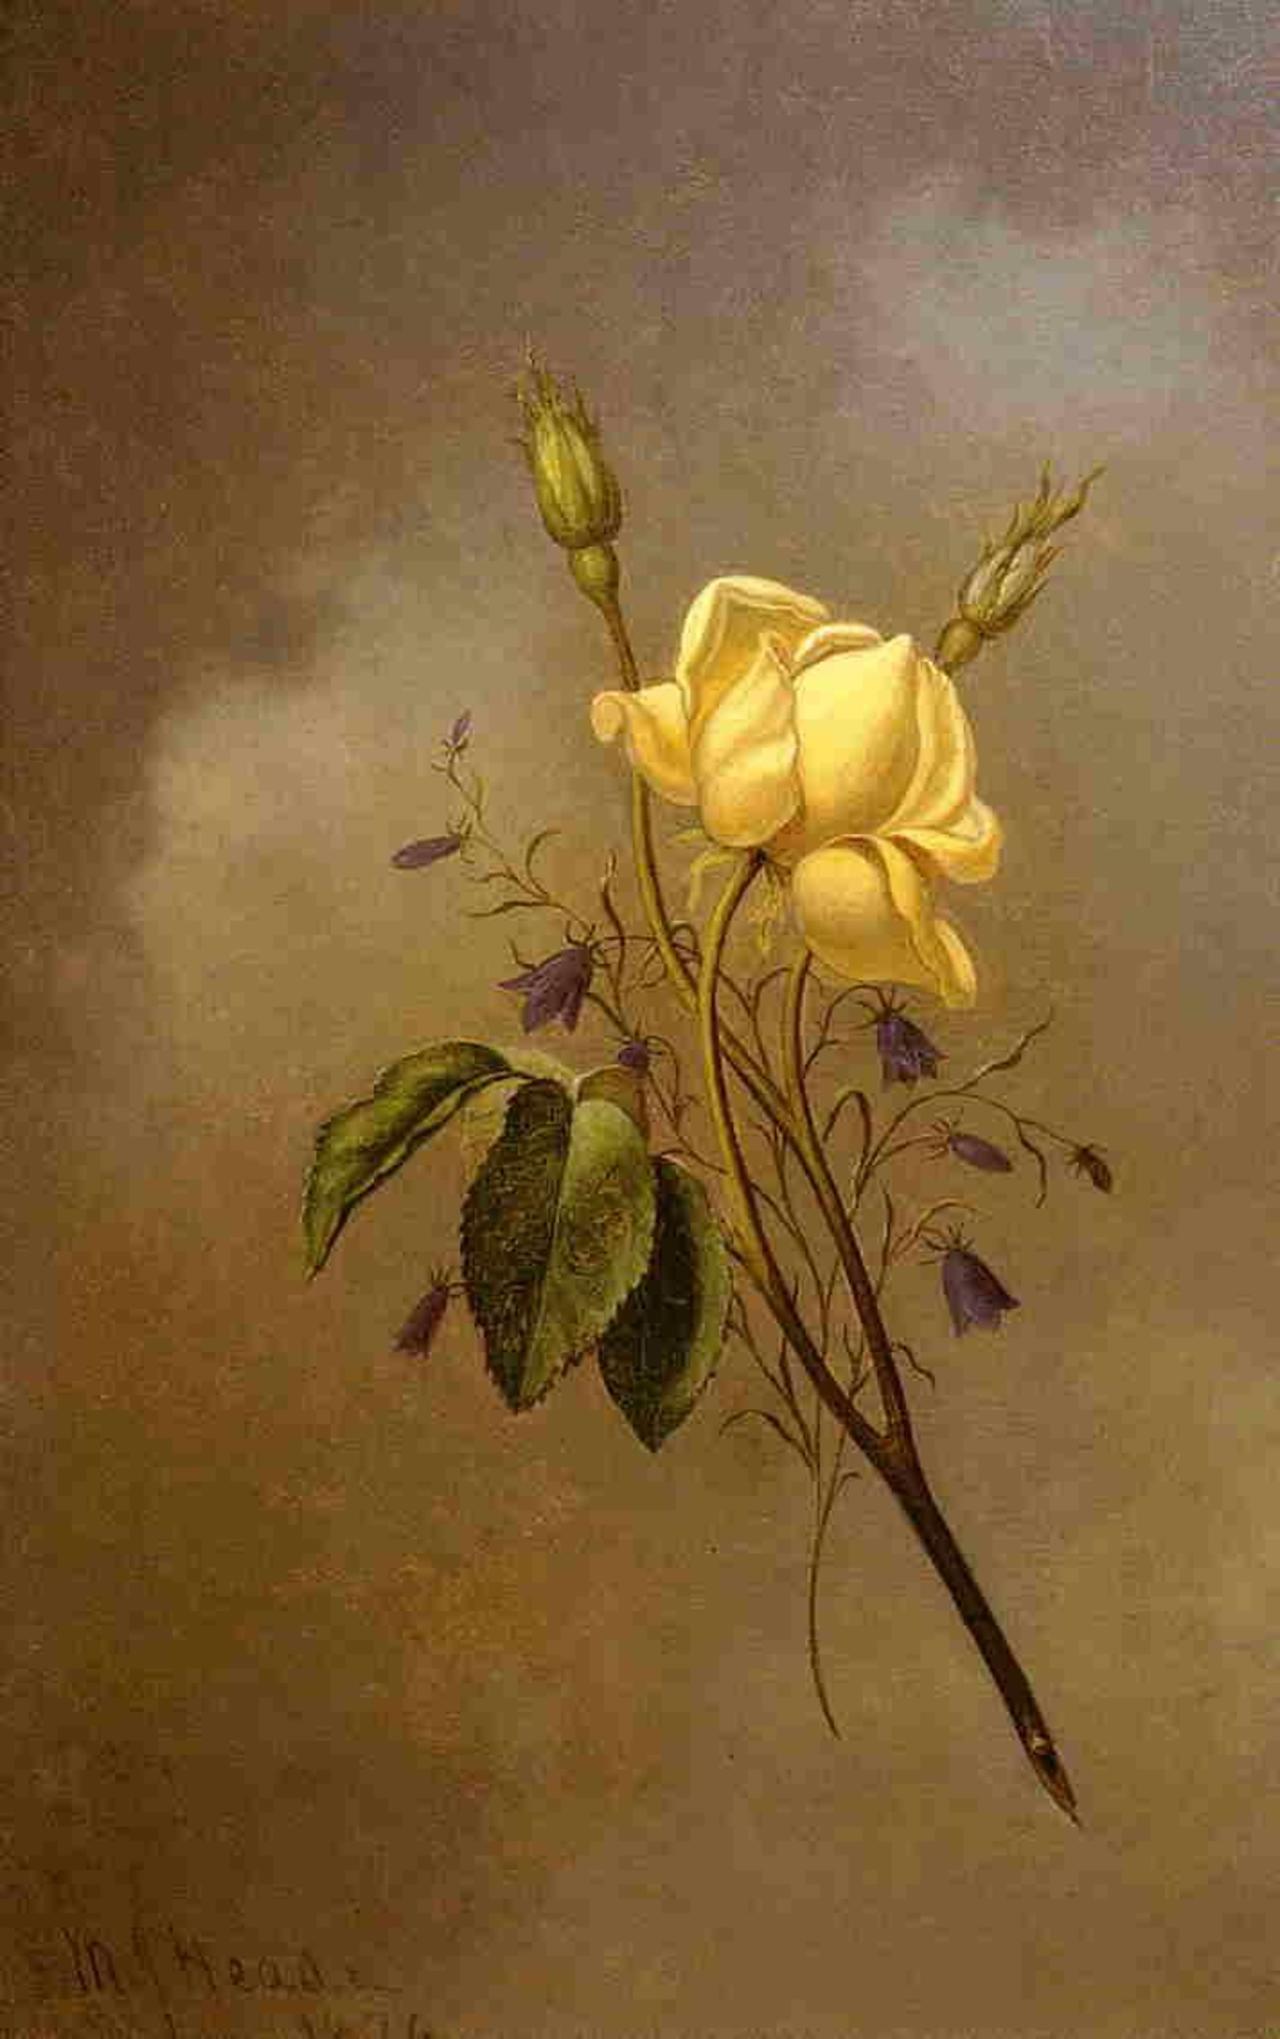 RT @Helisabethhh: ... Rose against a Cloudy Sky  Martin Johnson Heade (1819-1904)#art #painting #twitart https://t.co/fcrANYqHs3